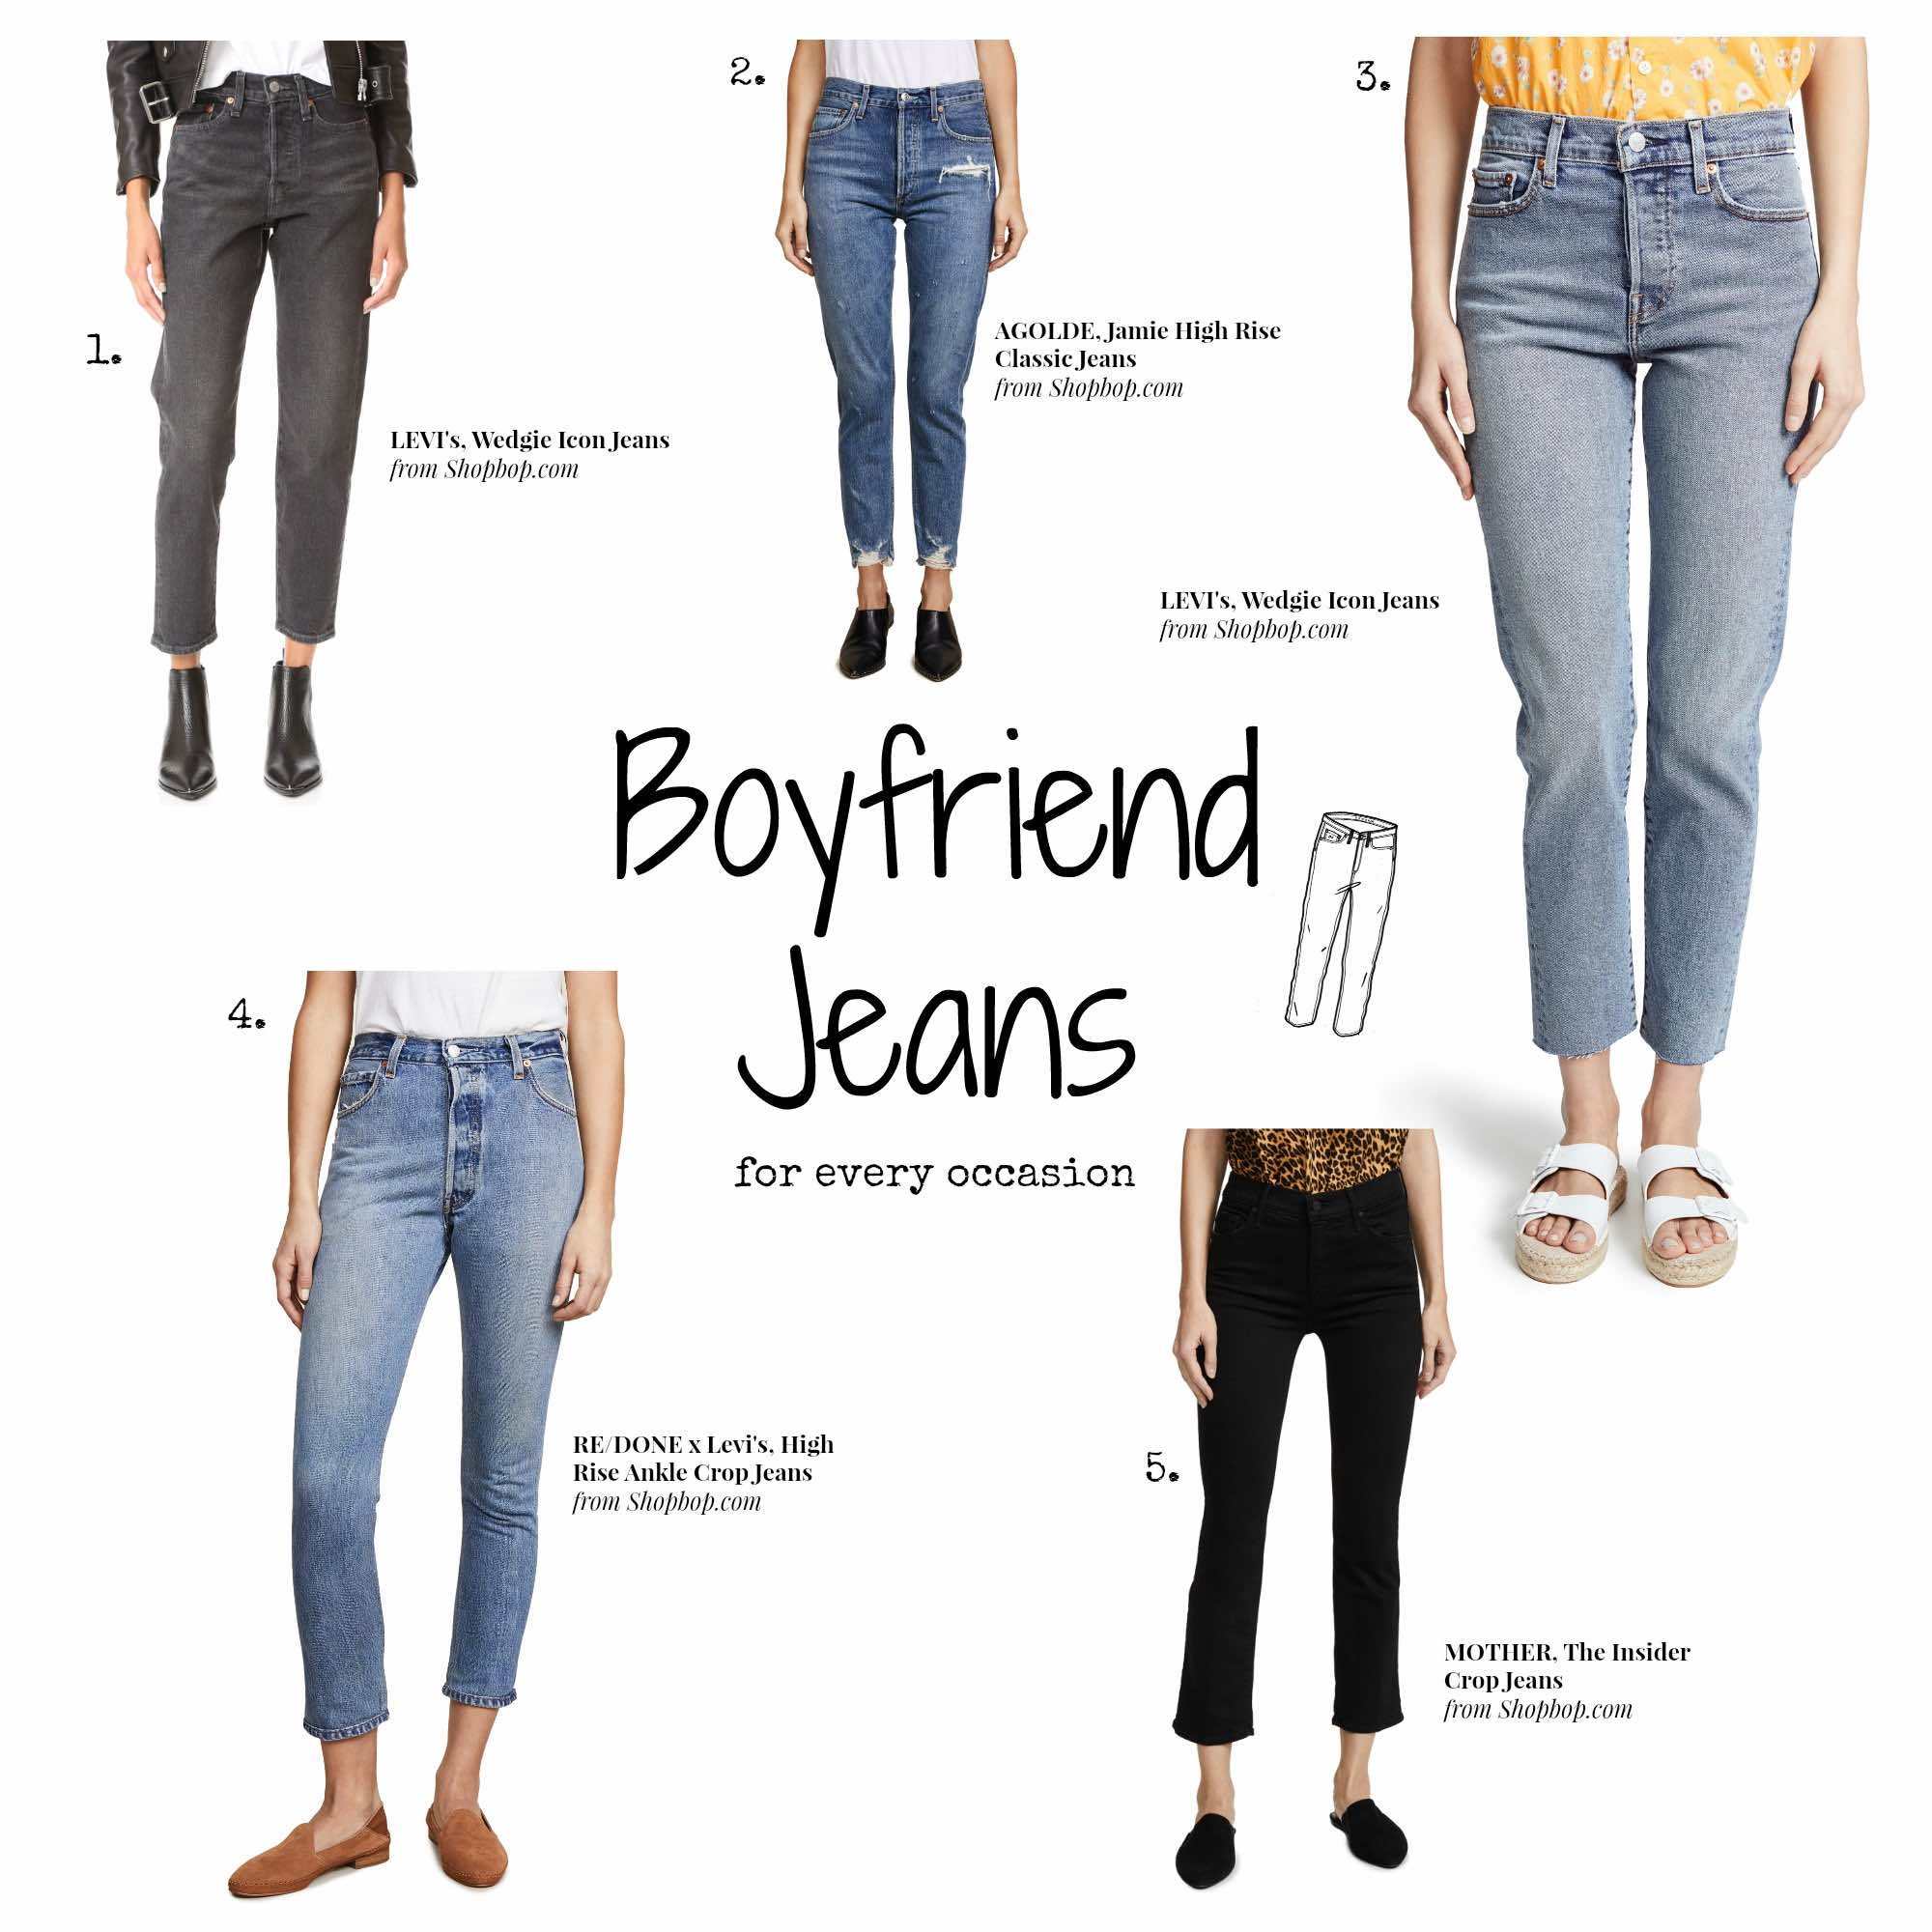 Shopbop Sale - Boyfriend Jeans